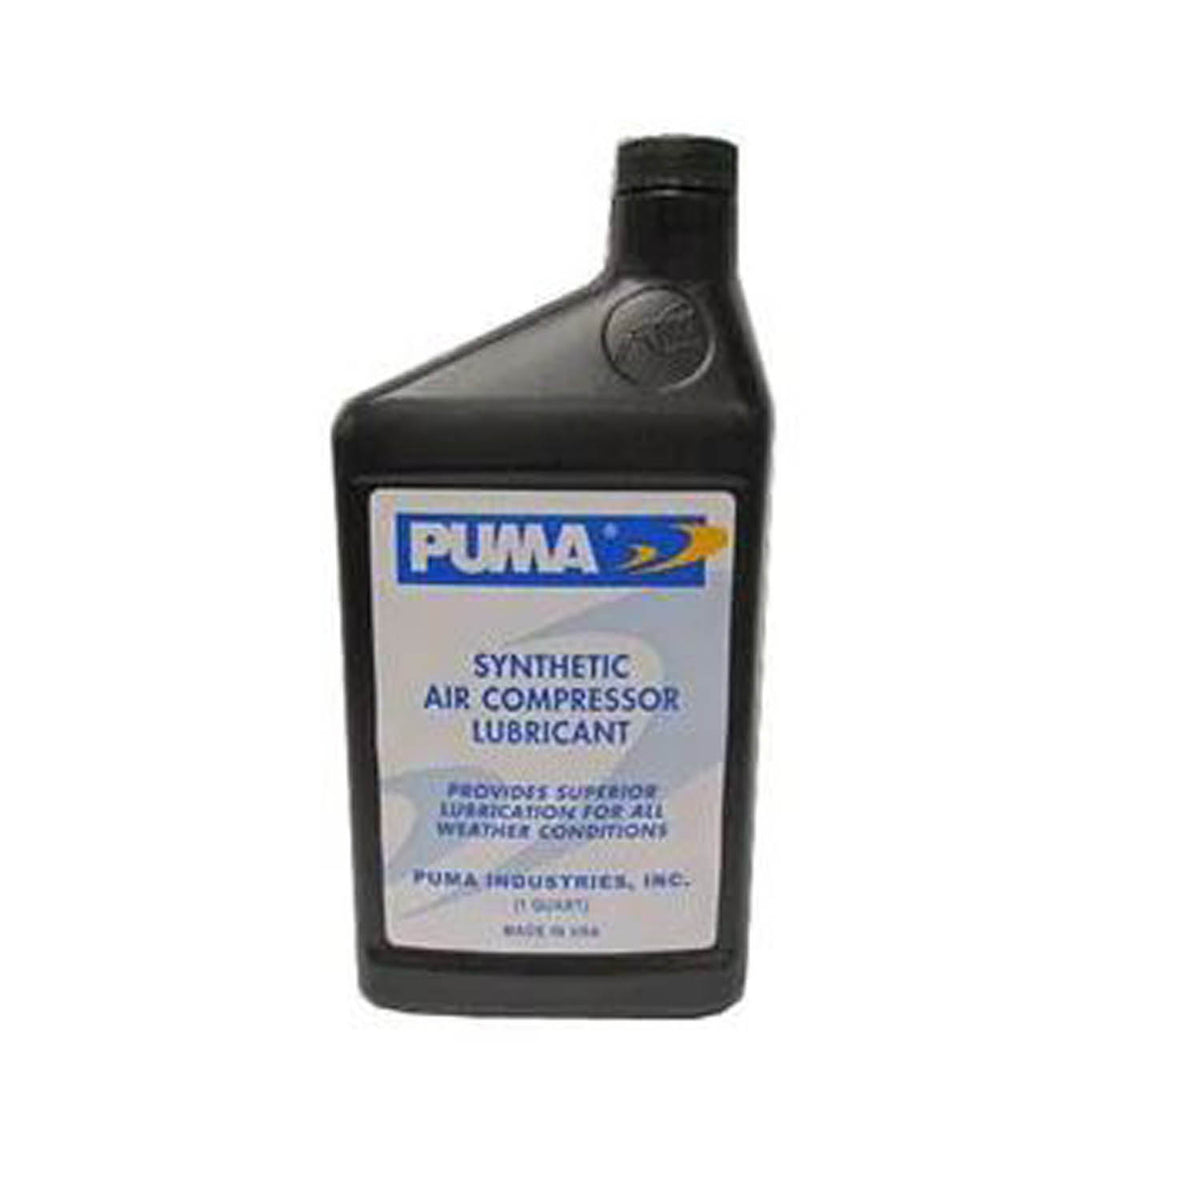 puma air compressor oil off 60% - www 